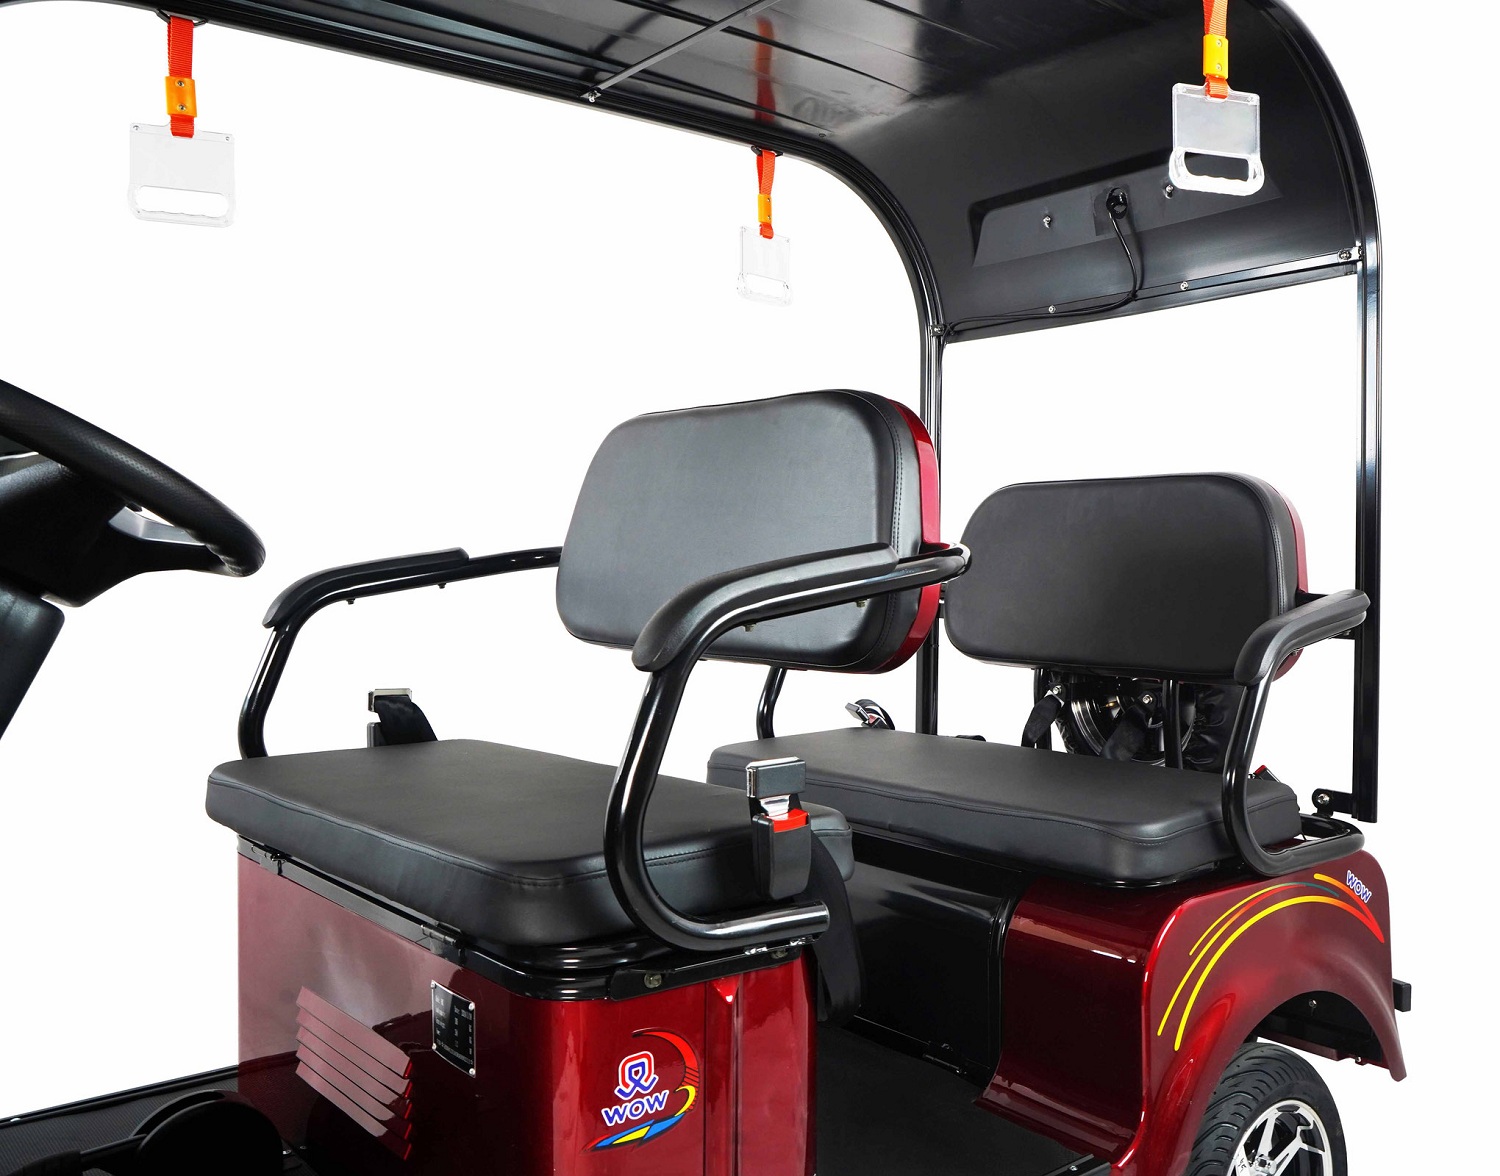 Vitacci WOW 1200 Electric Mini Golf Cart